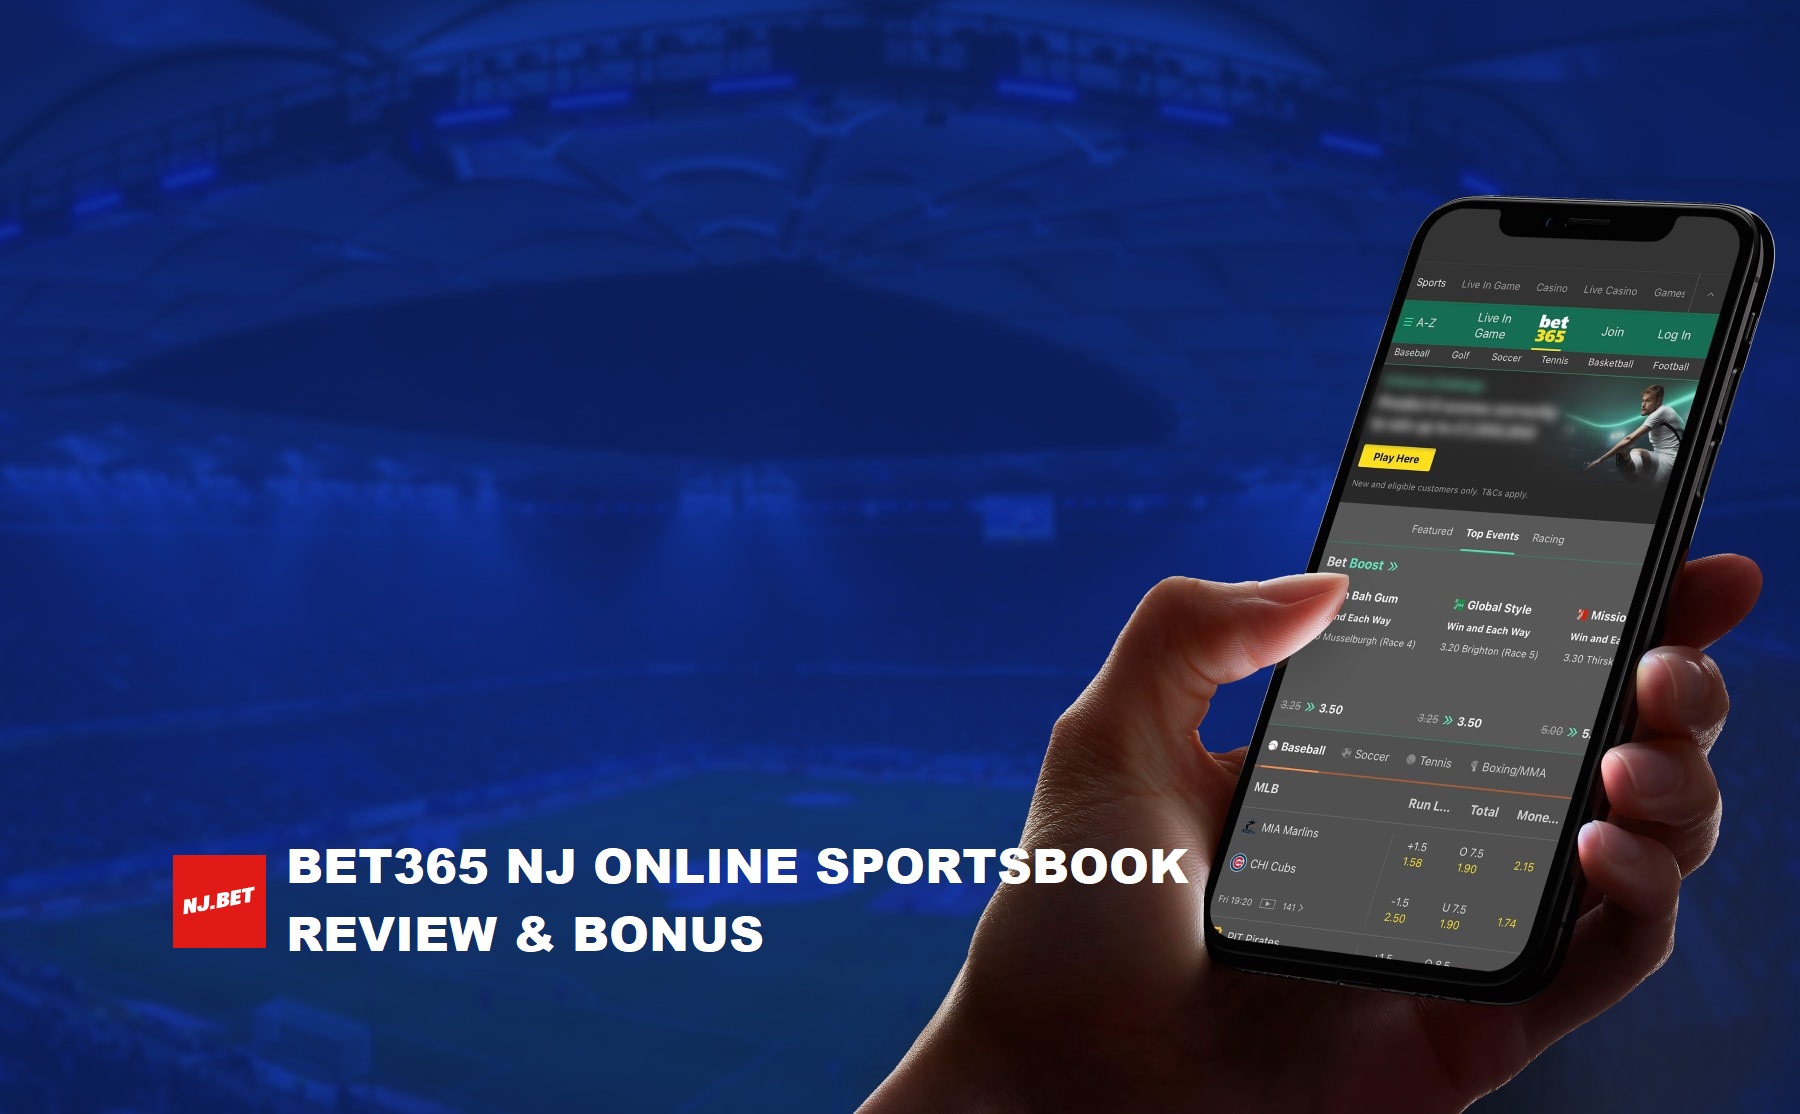 bet365 sportsbook app NJ review